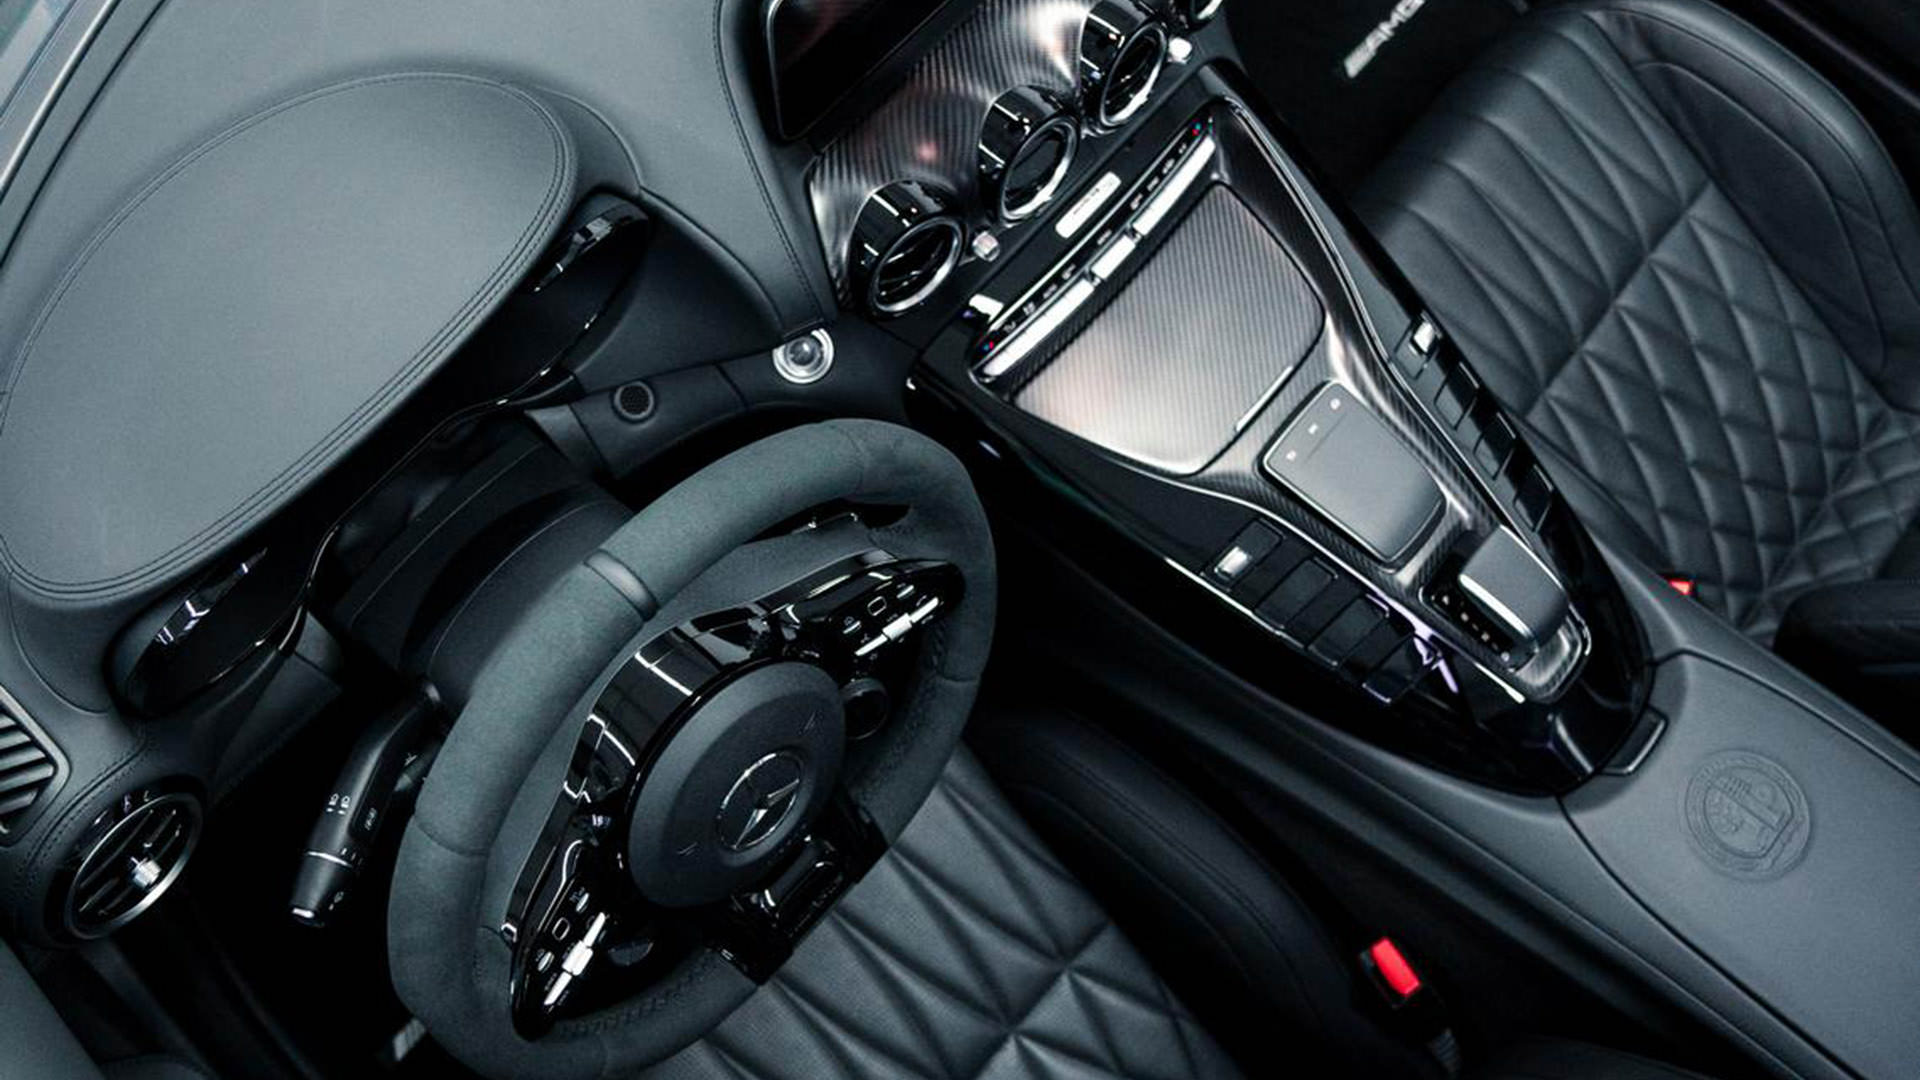 نمای داخل کابین مرسدس آ ام گ جی تی آر اسپیدستر / Mercedes-AMG GT R Speedster مشکی رنگ